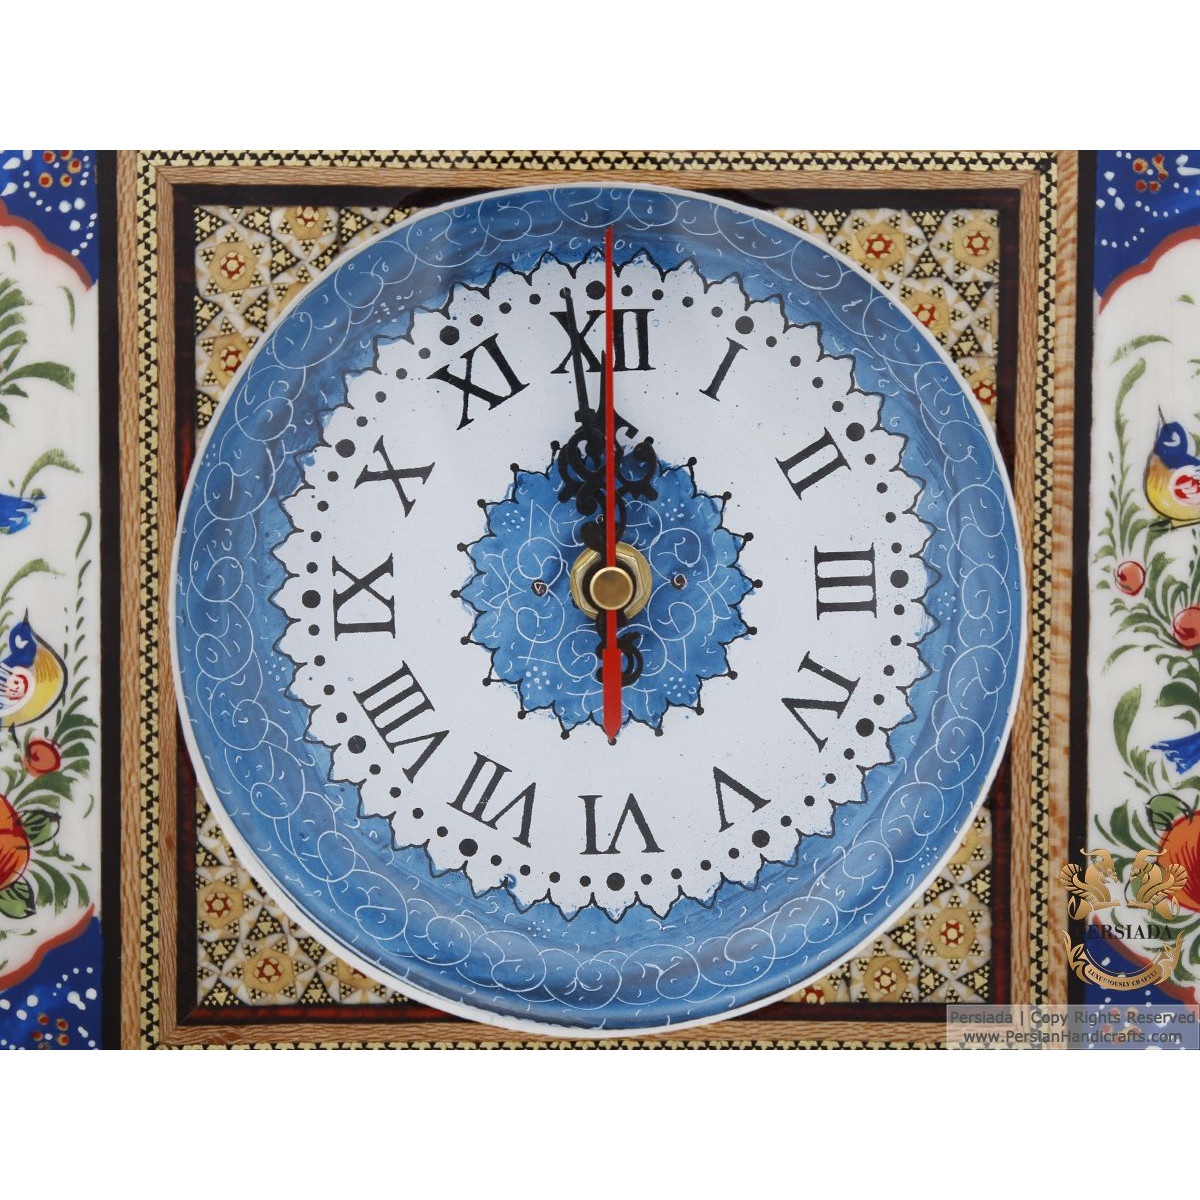 Square Wall Clock - Miniature on Khatam | HM4101 Persiada-Persian Handicrafts